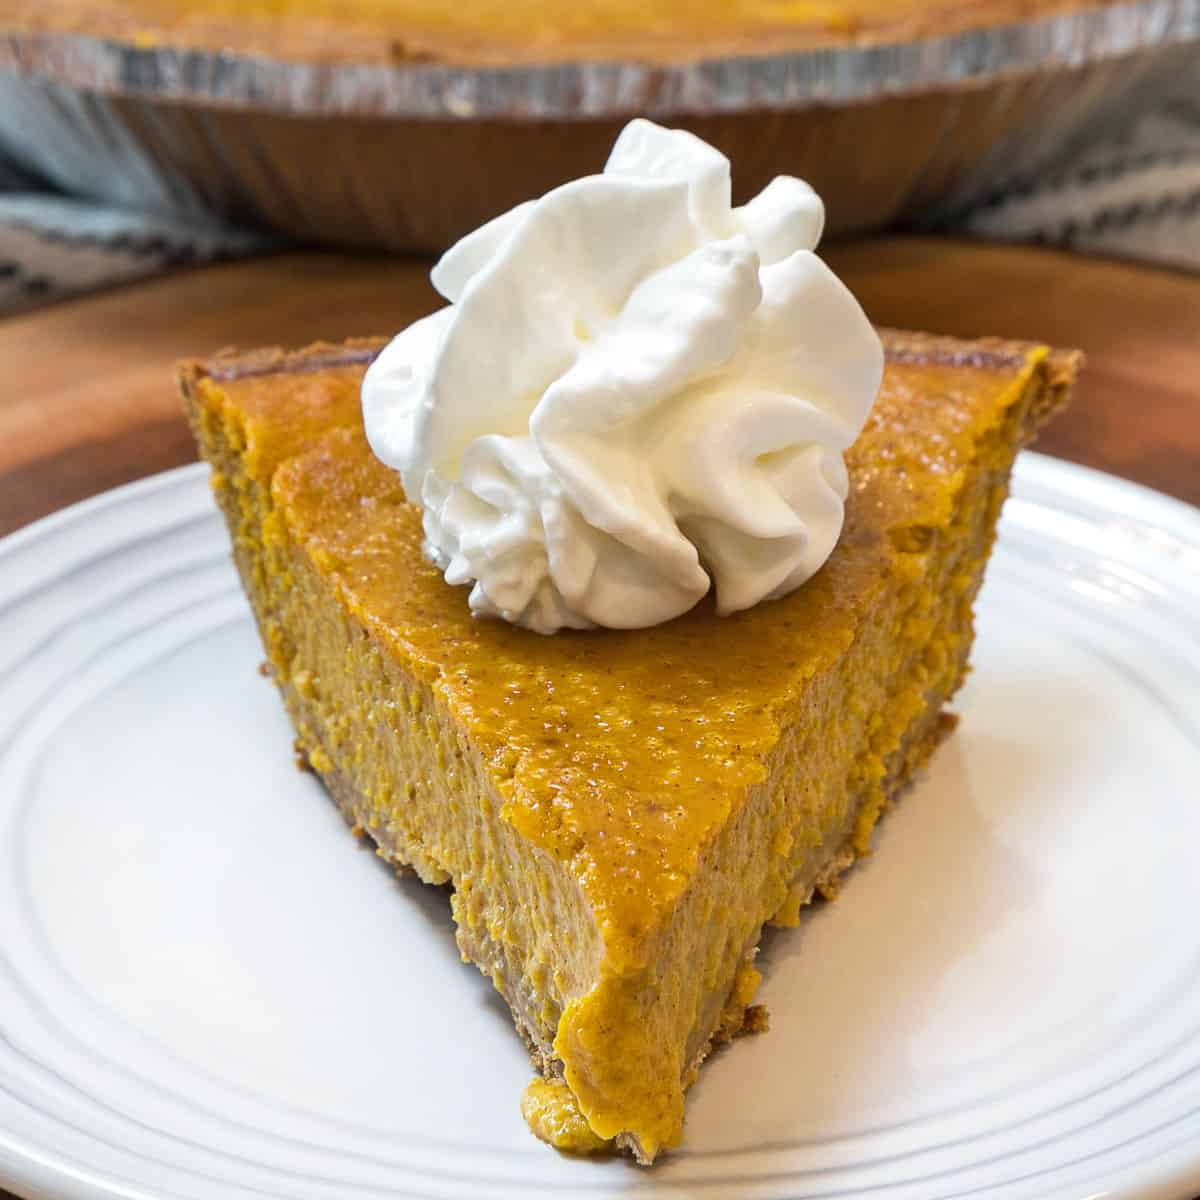 Libby’s Pumpkin Pie Recipe for 2 Pies